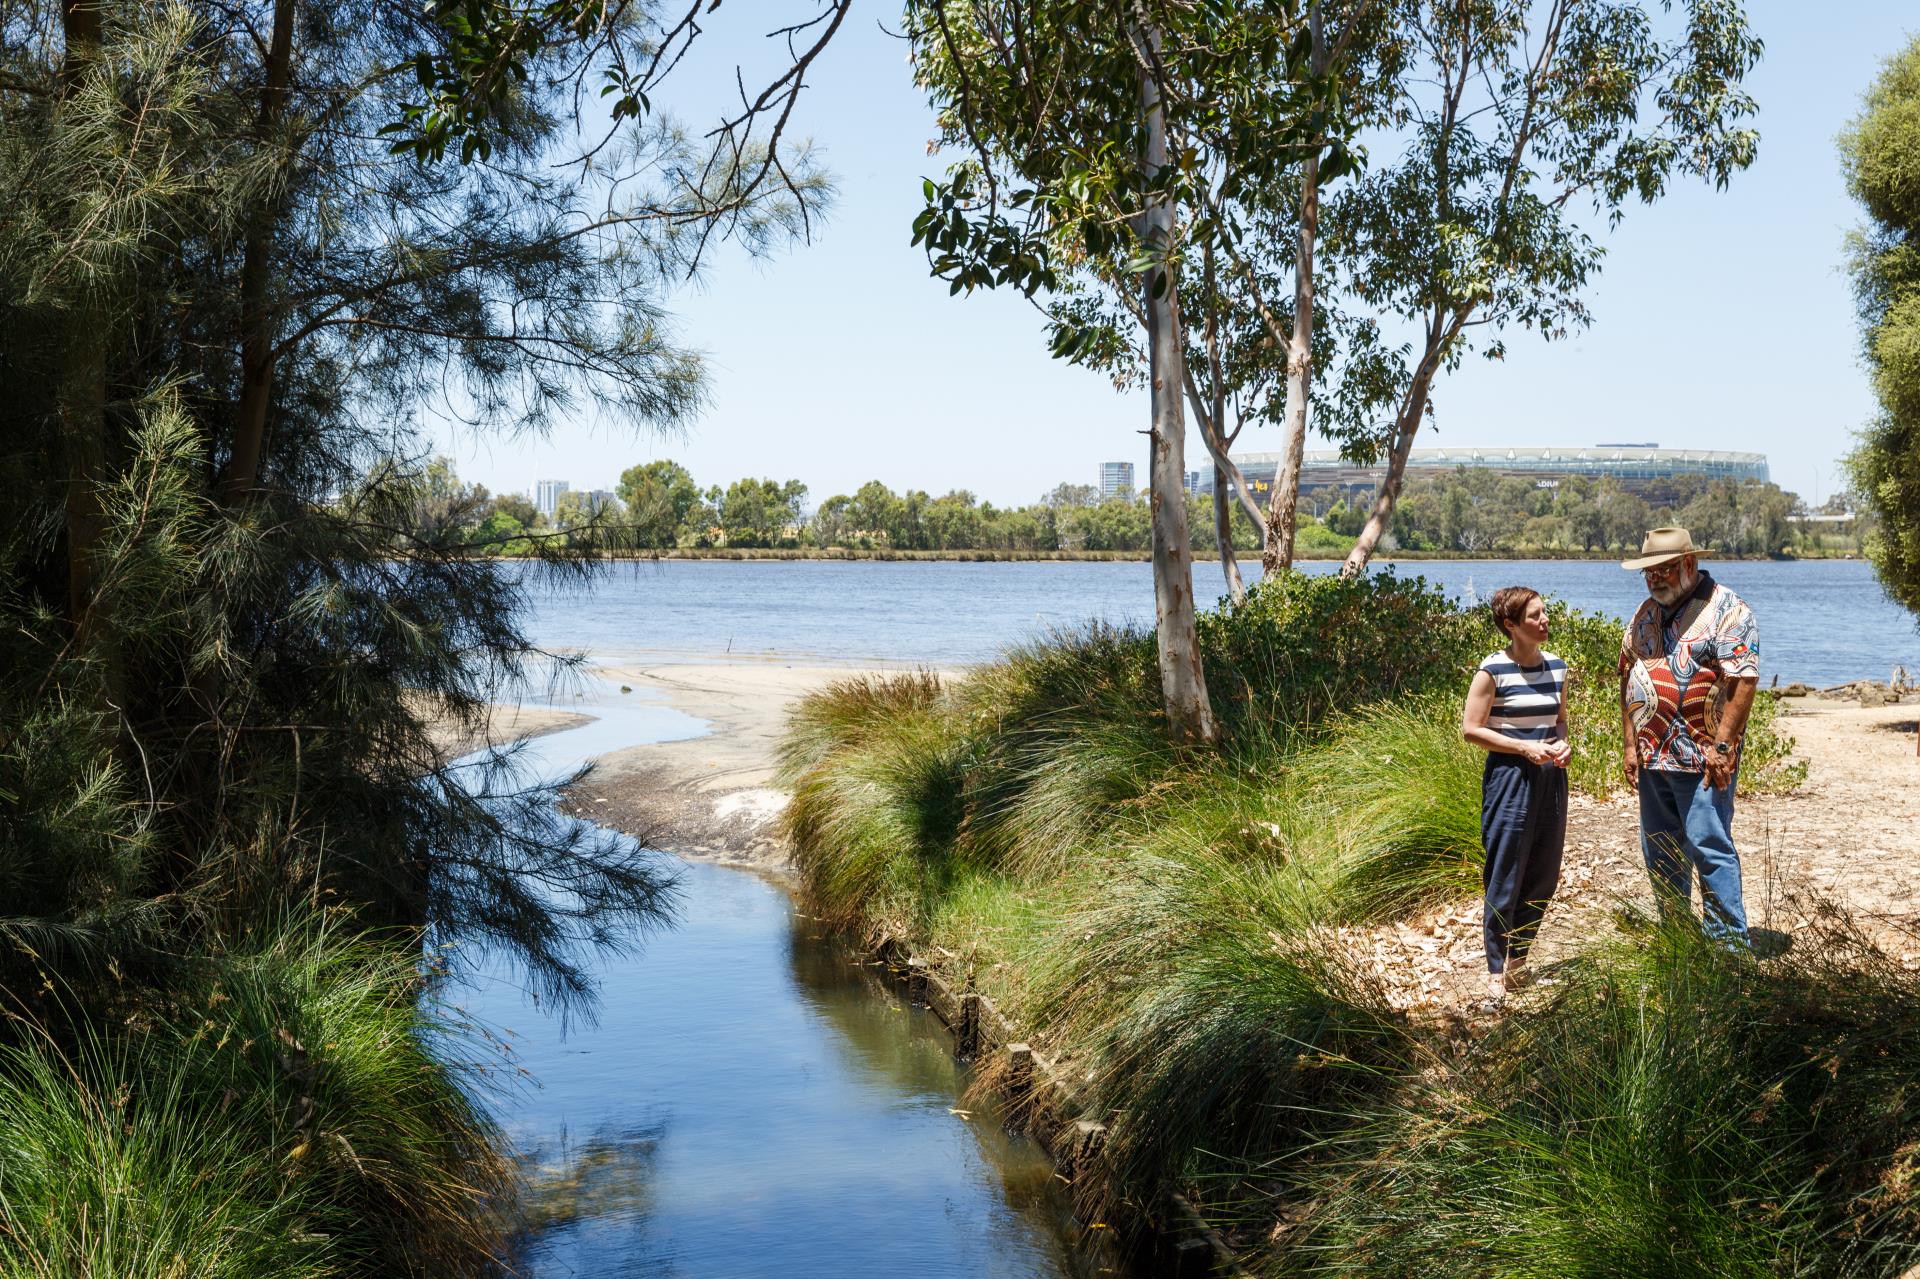 Feedback sought on reviving Noongar park name